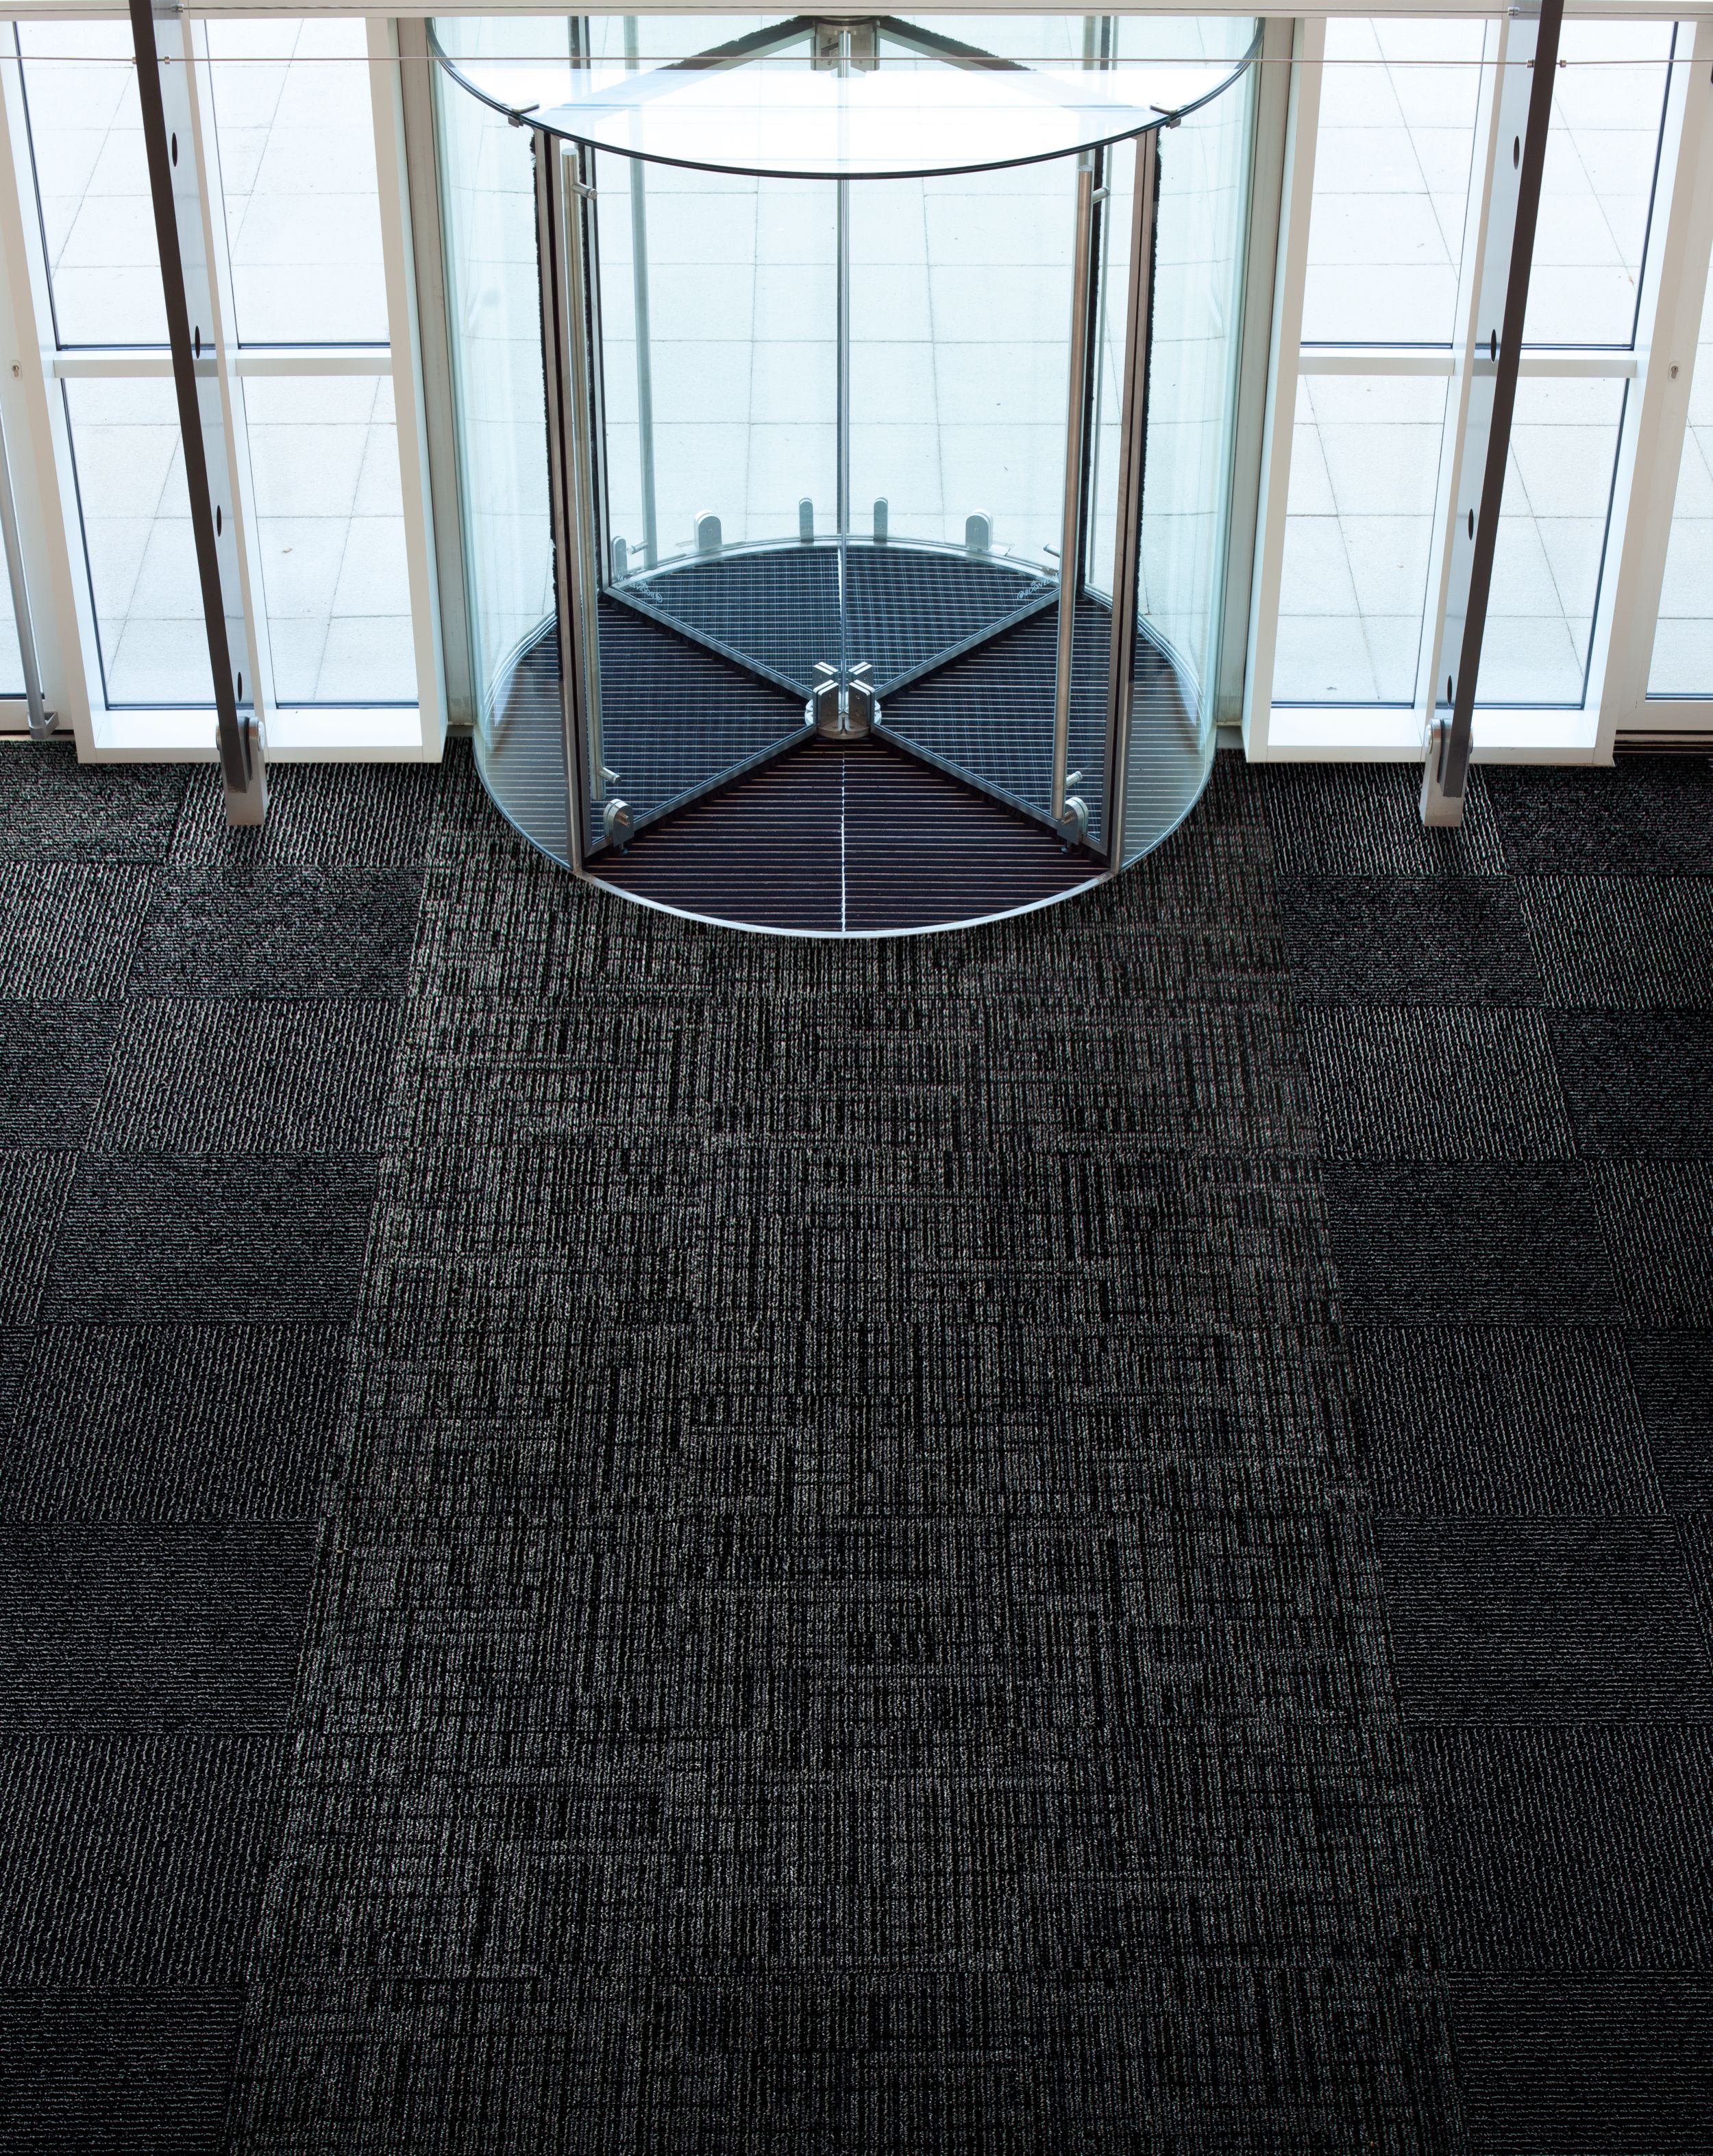 Interface SR699 and SR899 carpet tile in entryway with revolving door imagen número 5